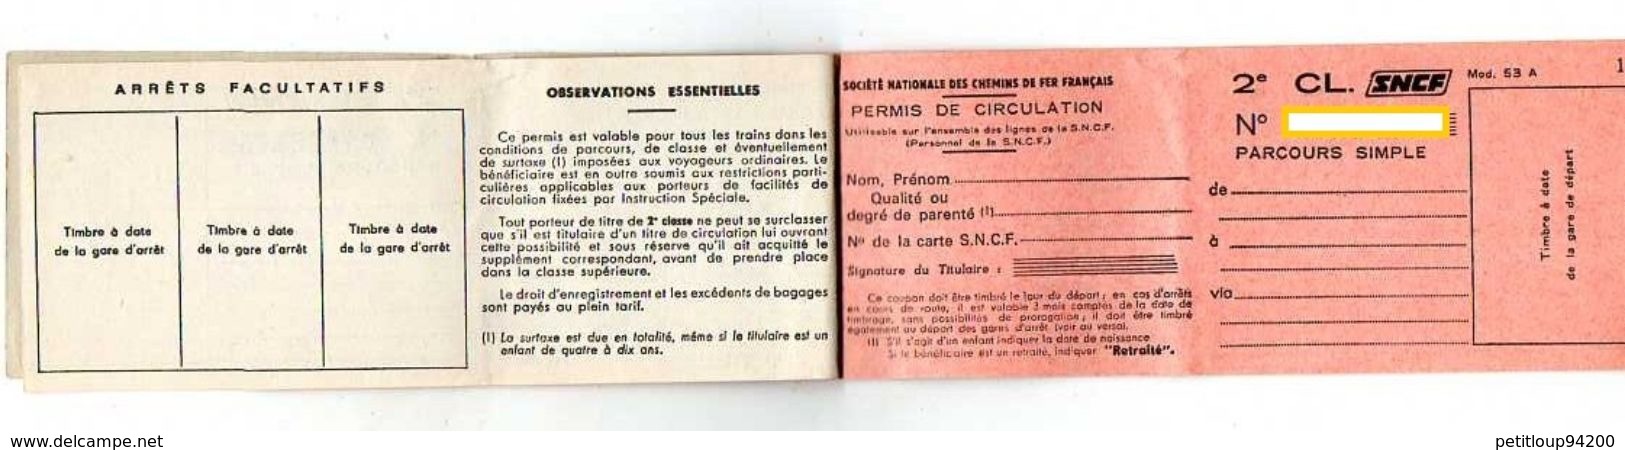 FASCICULE DE PERMIS Permis De Circulation  2e CL.SNCF - Europe